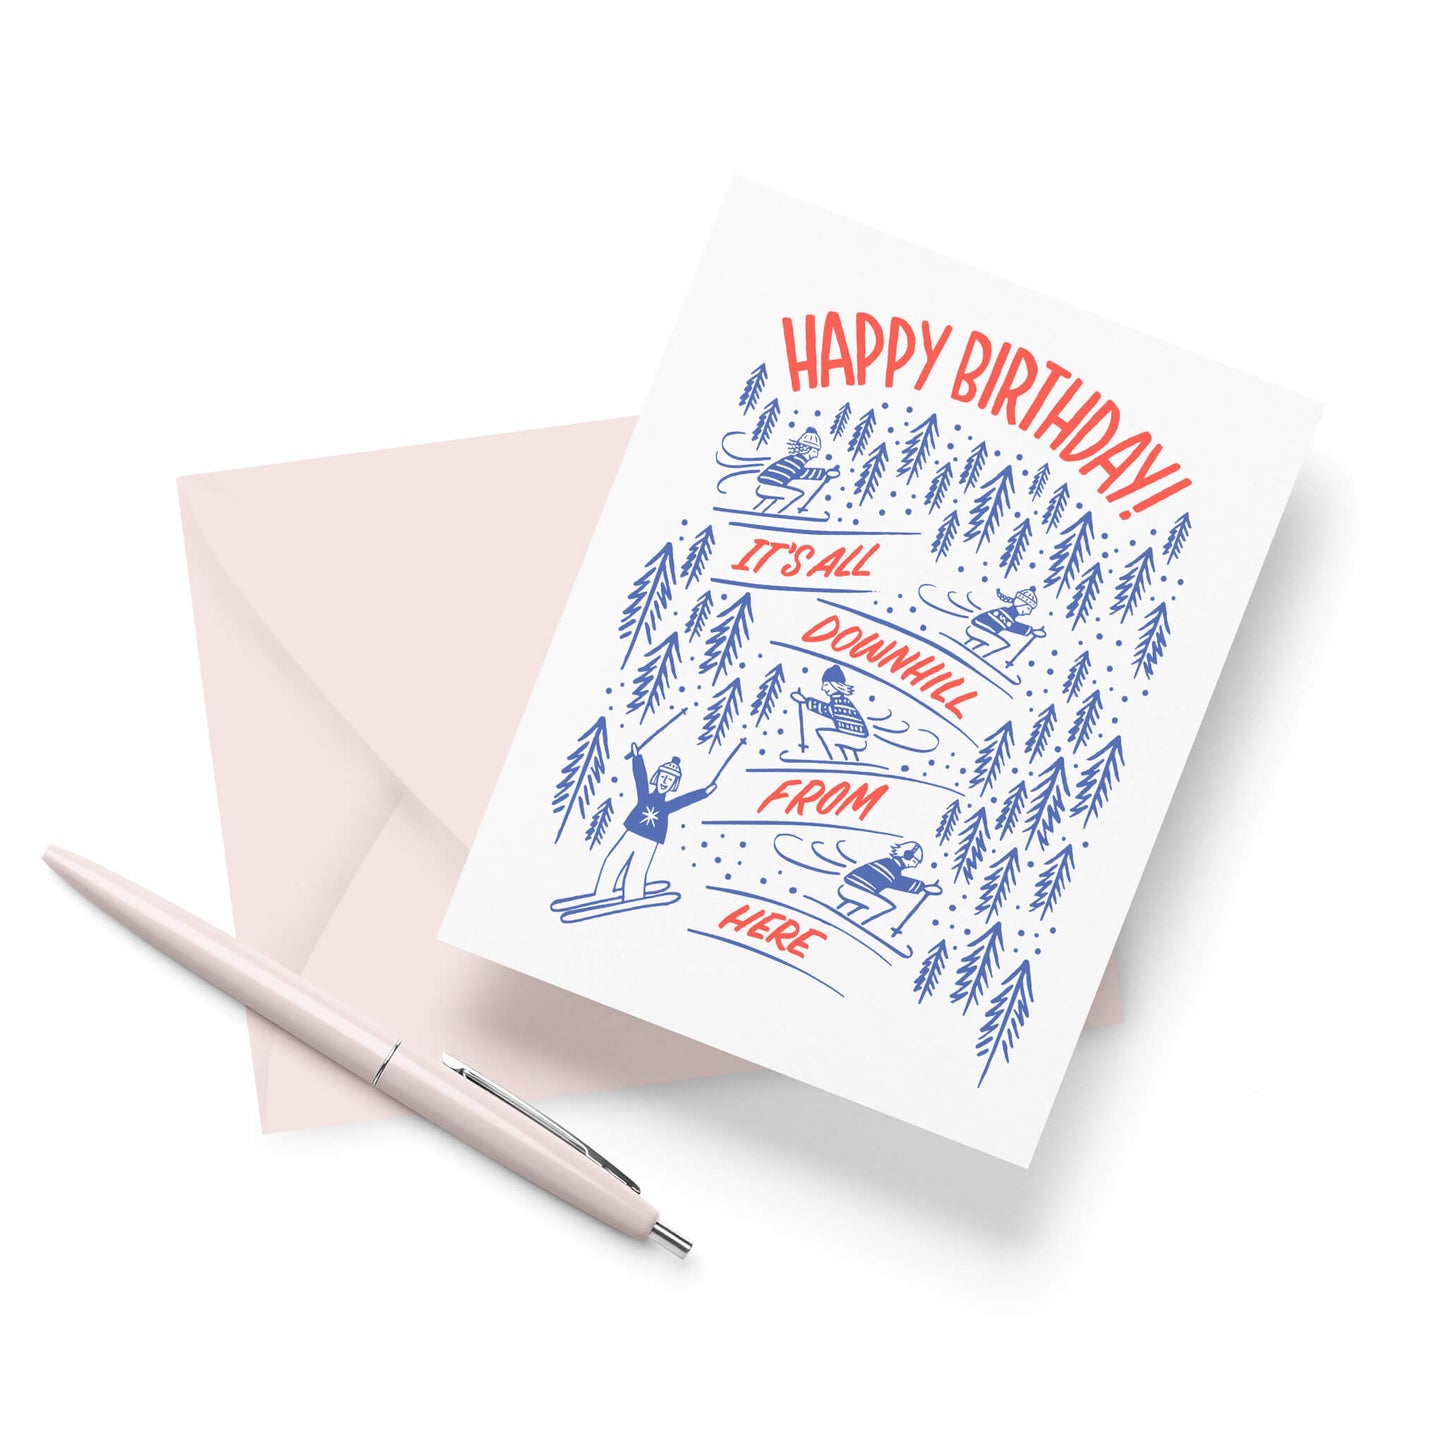 Downhill Birthday Letterpress Card